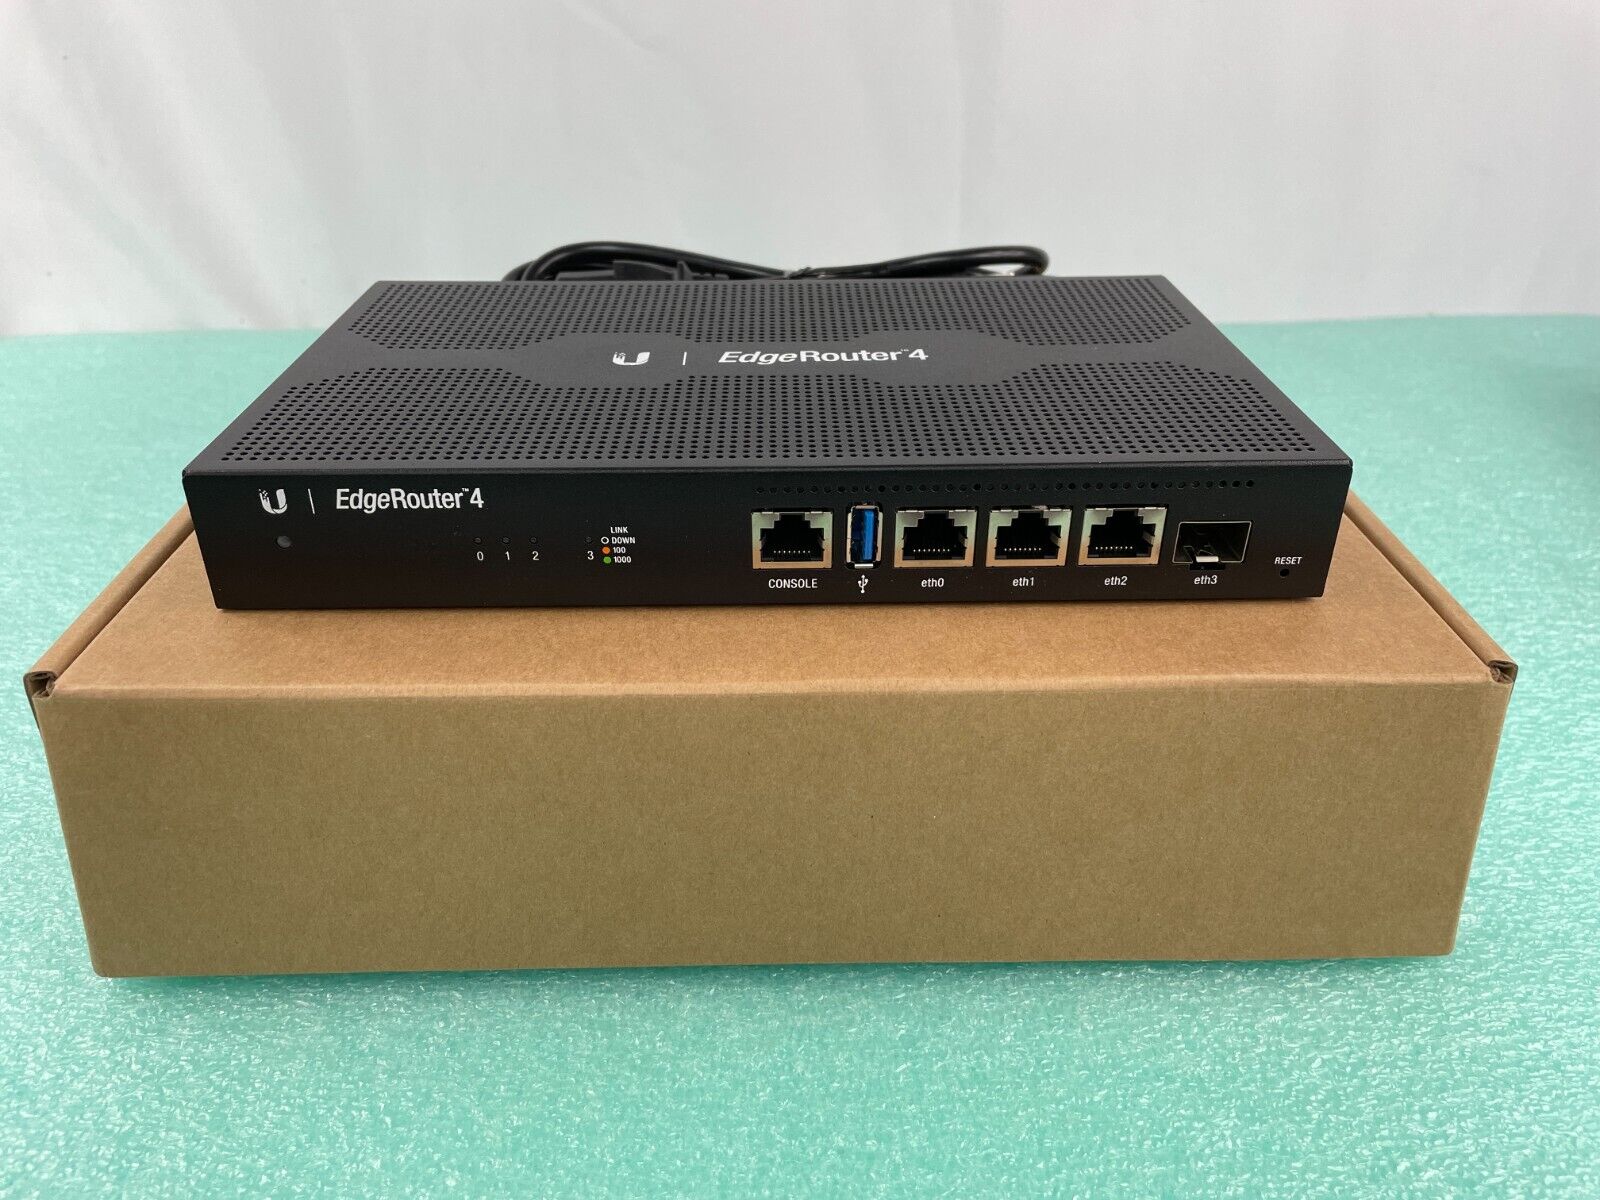 Ubiquiti ER-4 EdgeRouter 4 Port Gigabit Router with 1 x SFP Port